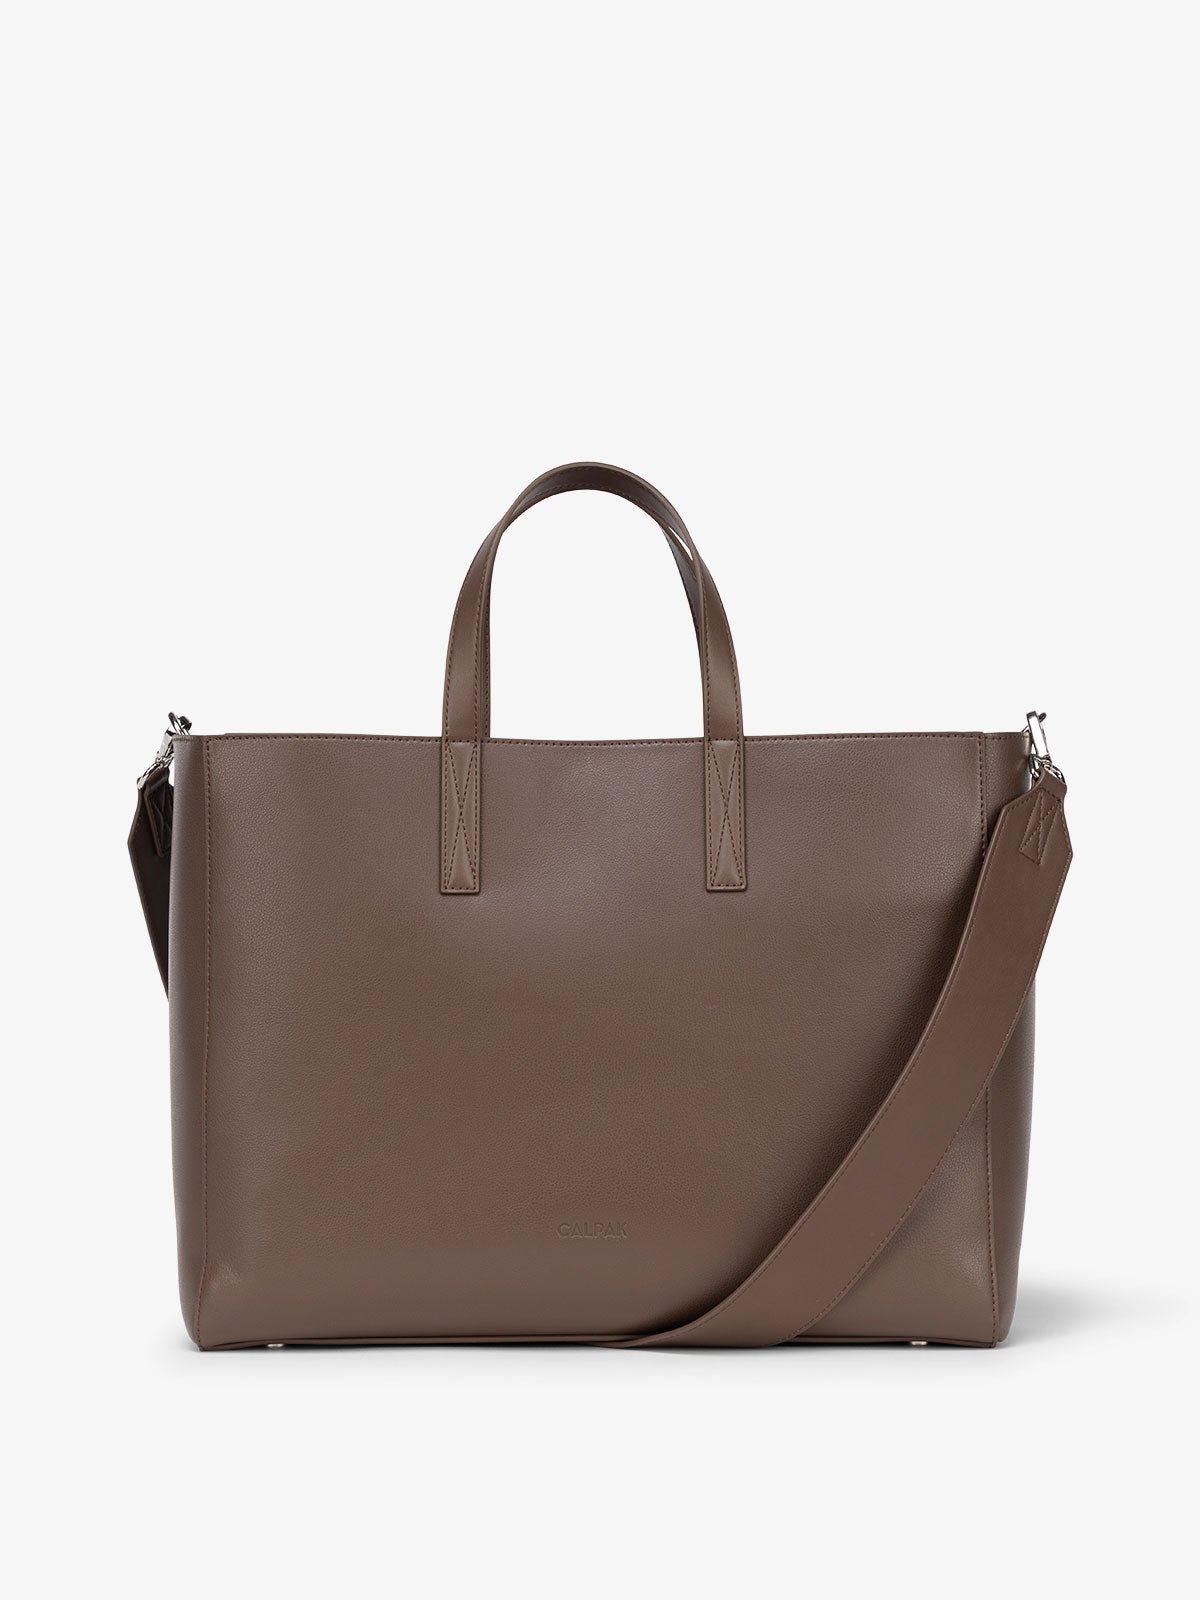 Haven laptop tote bag in espresso brown